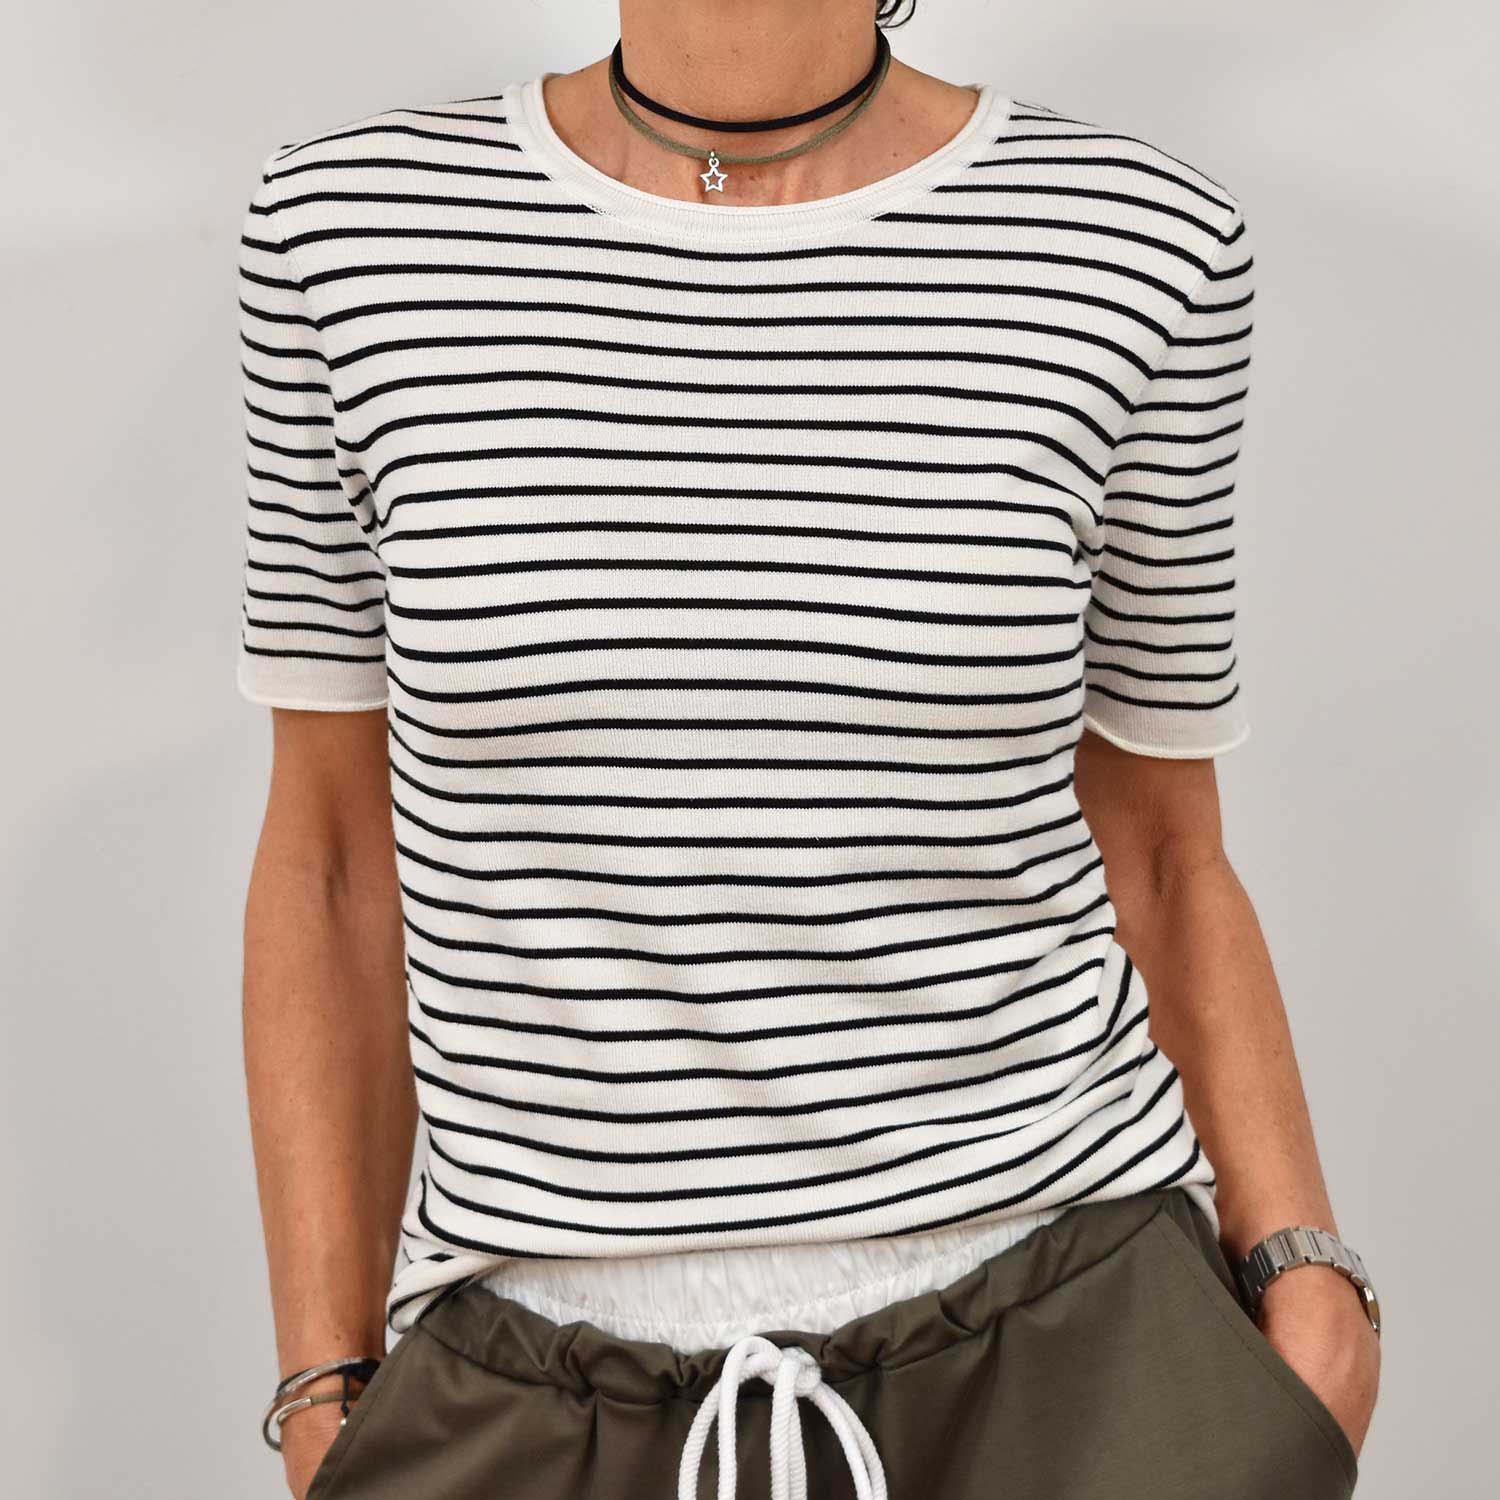 Short sleeve white striped sweater